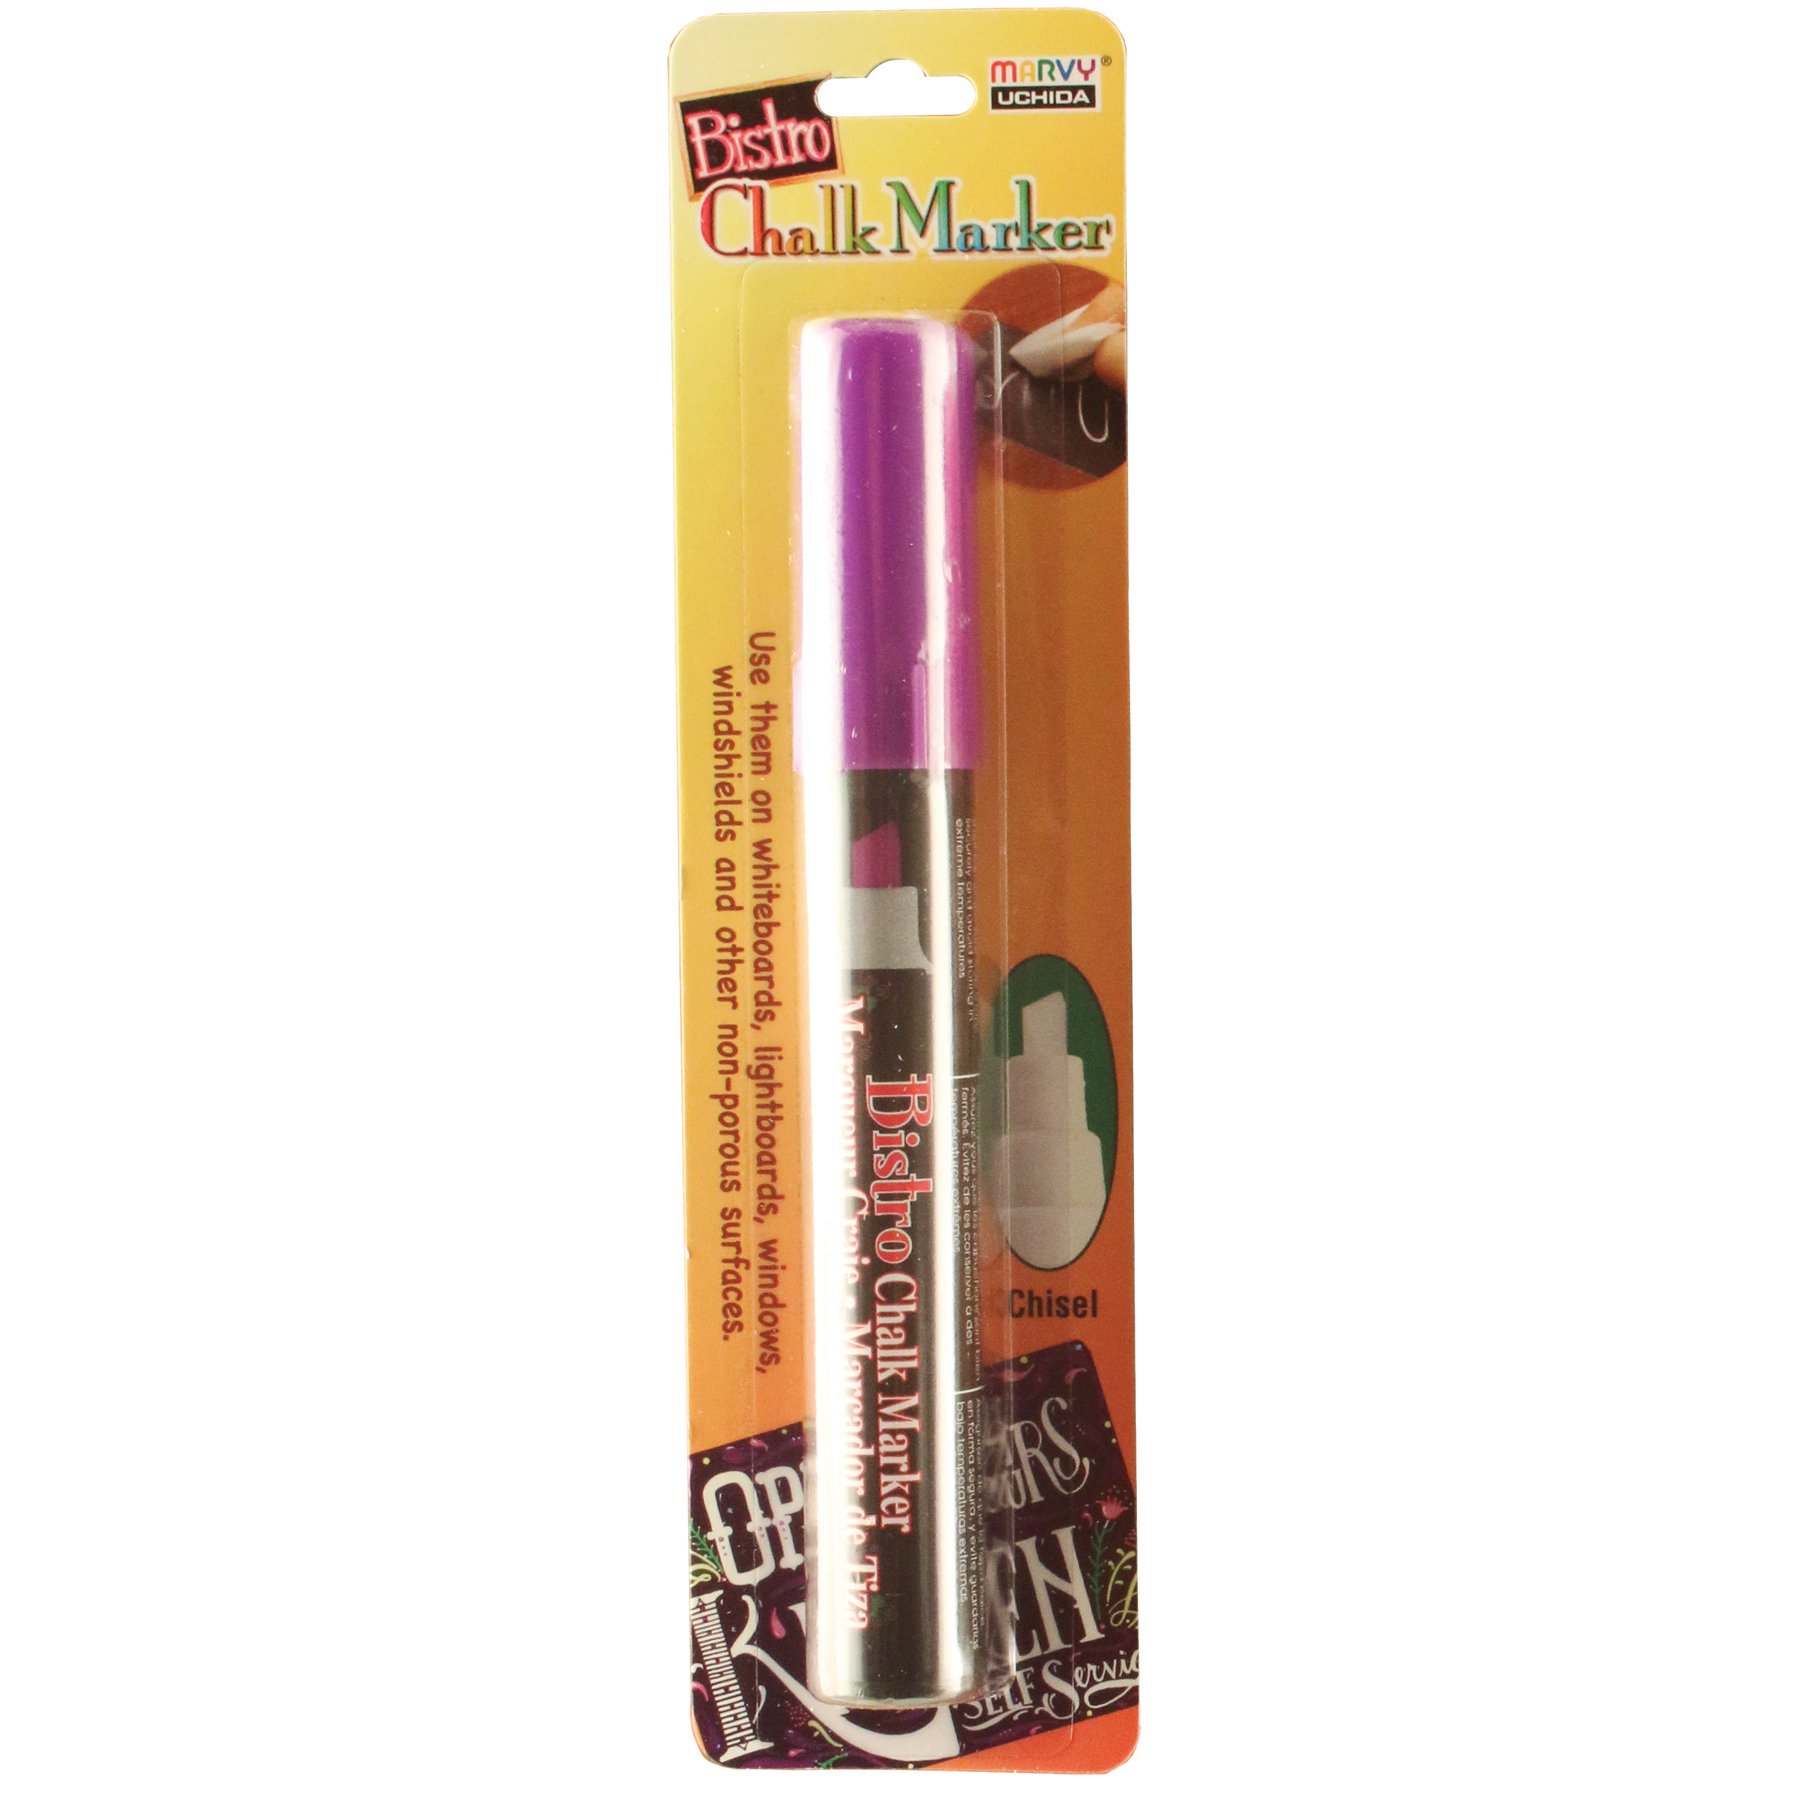 UcHIDA 483-c-F8 chisel Tip Bistro chalk Marker, Fluorescent Violet